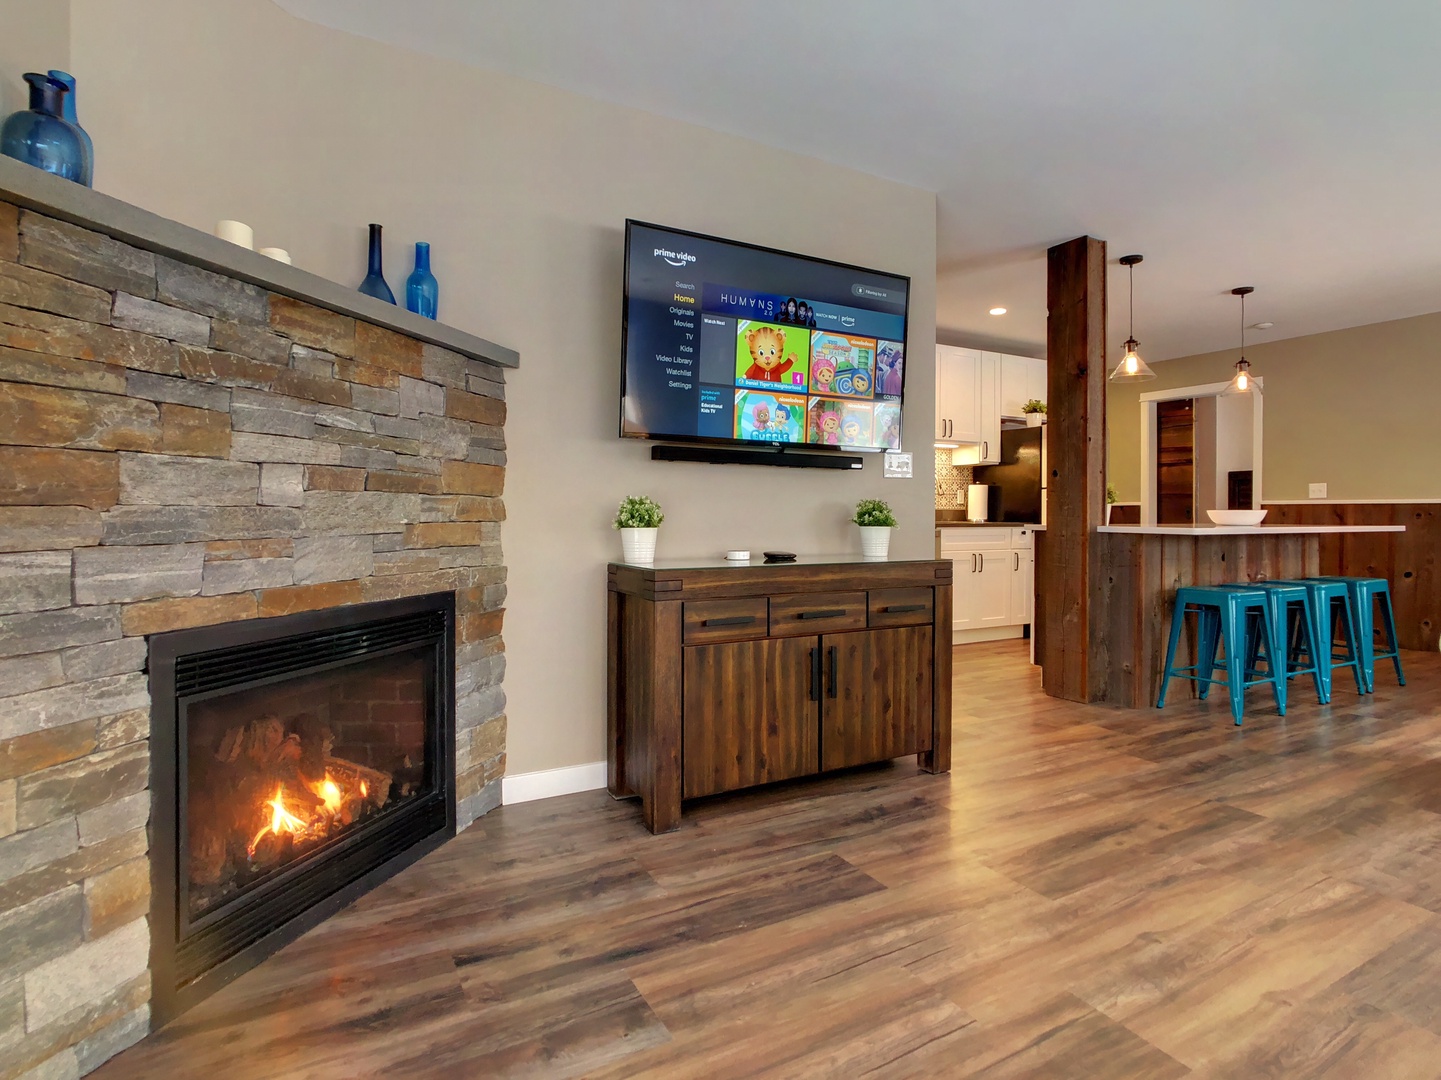 Gas fireplace and smart TV with soundbar